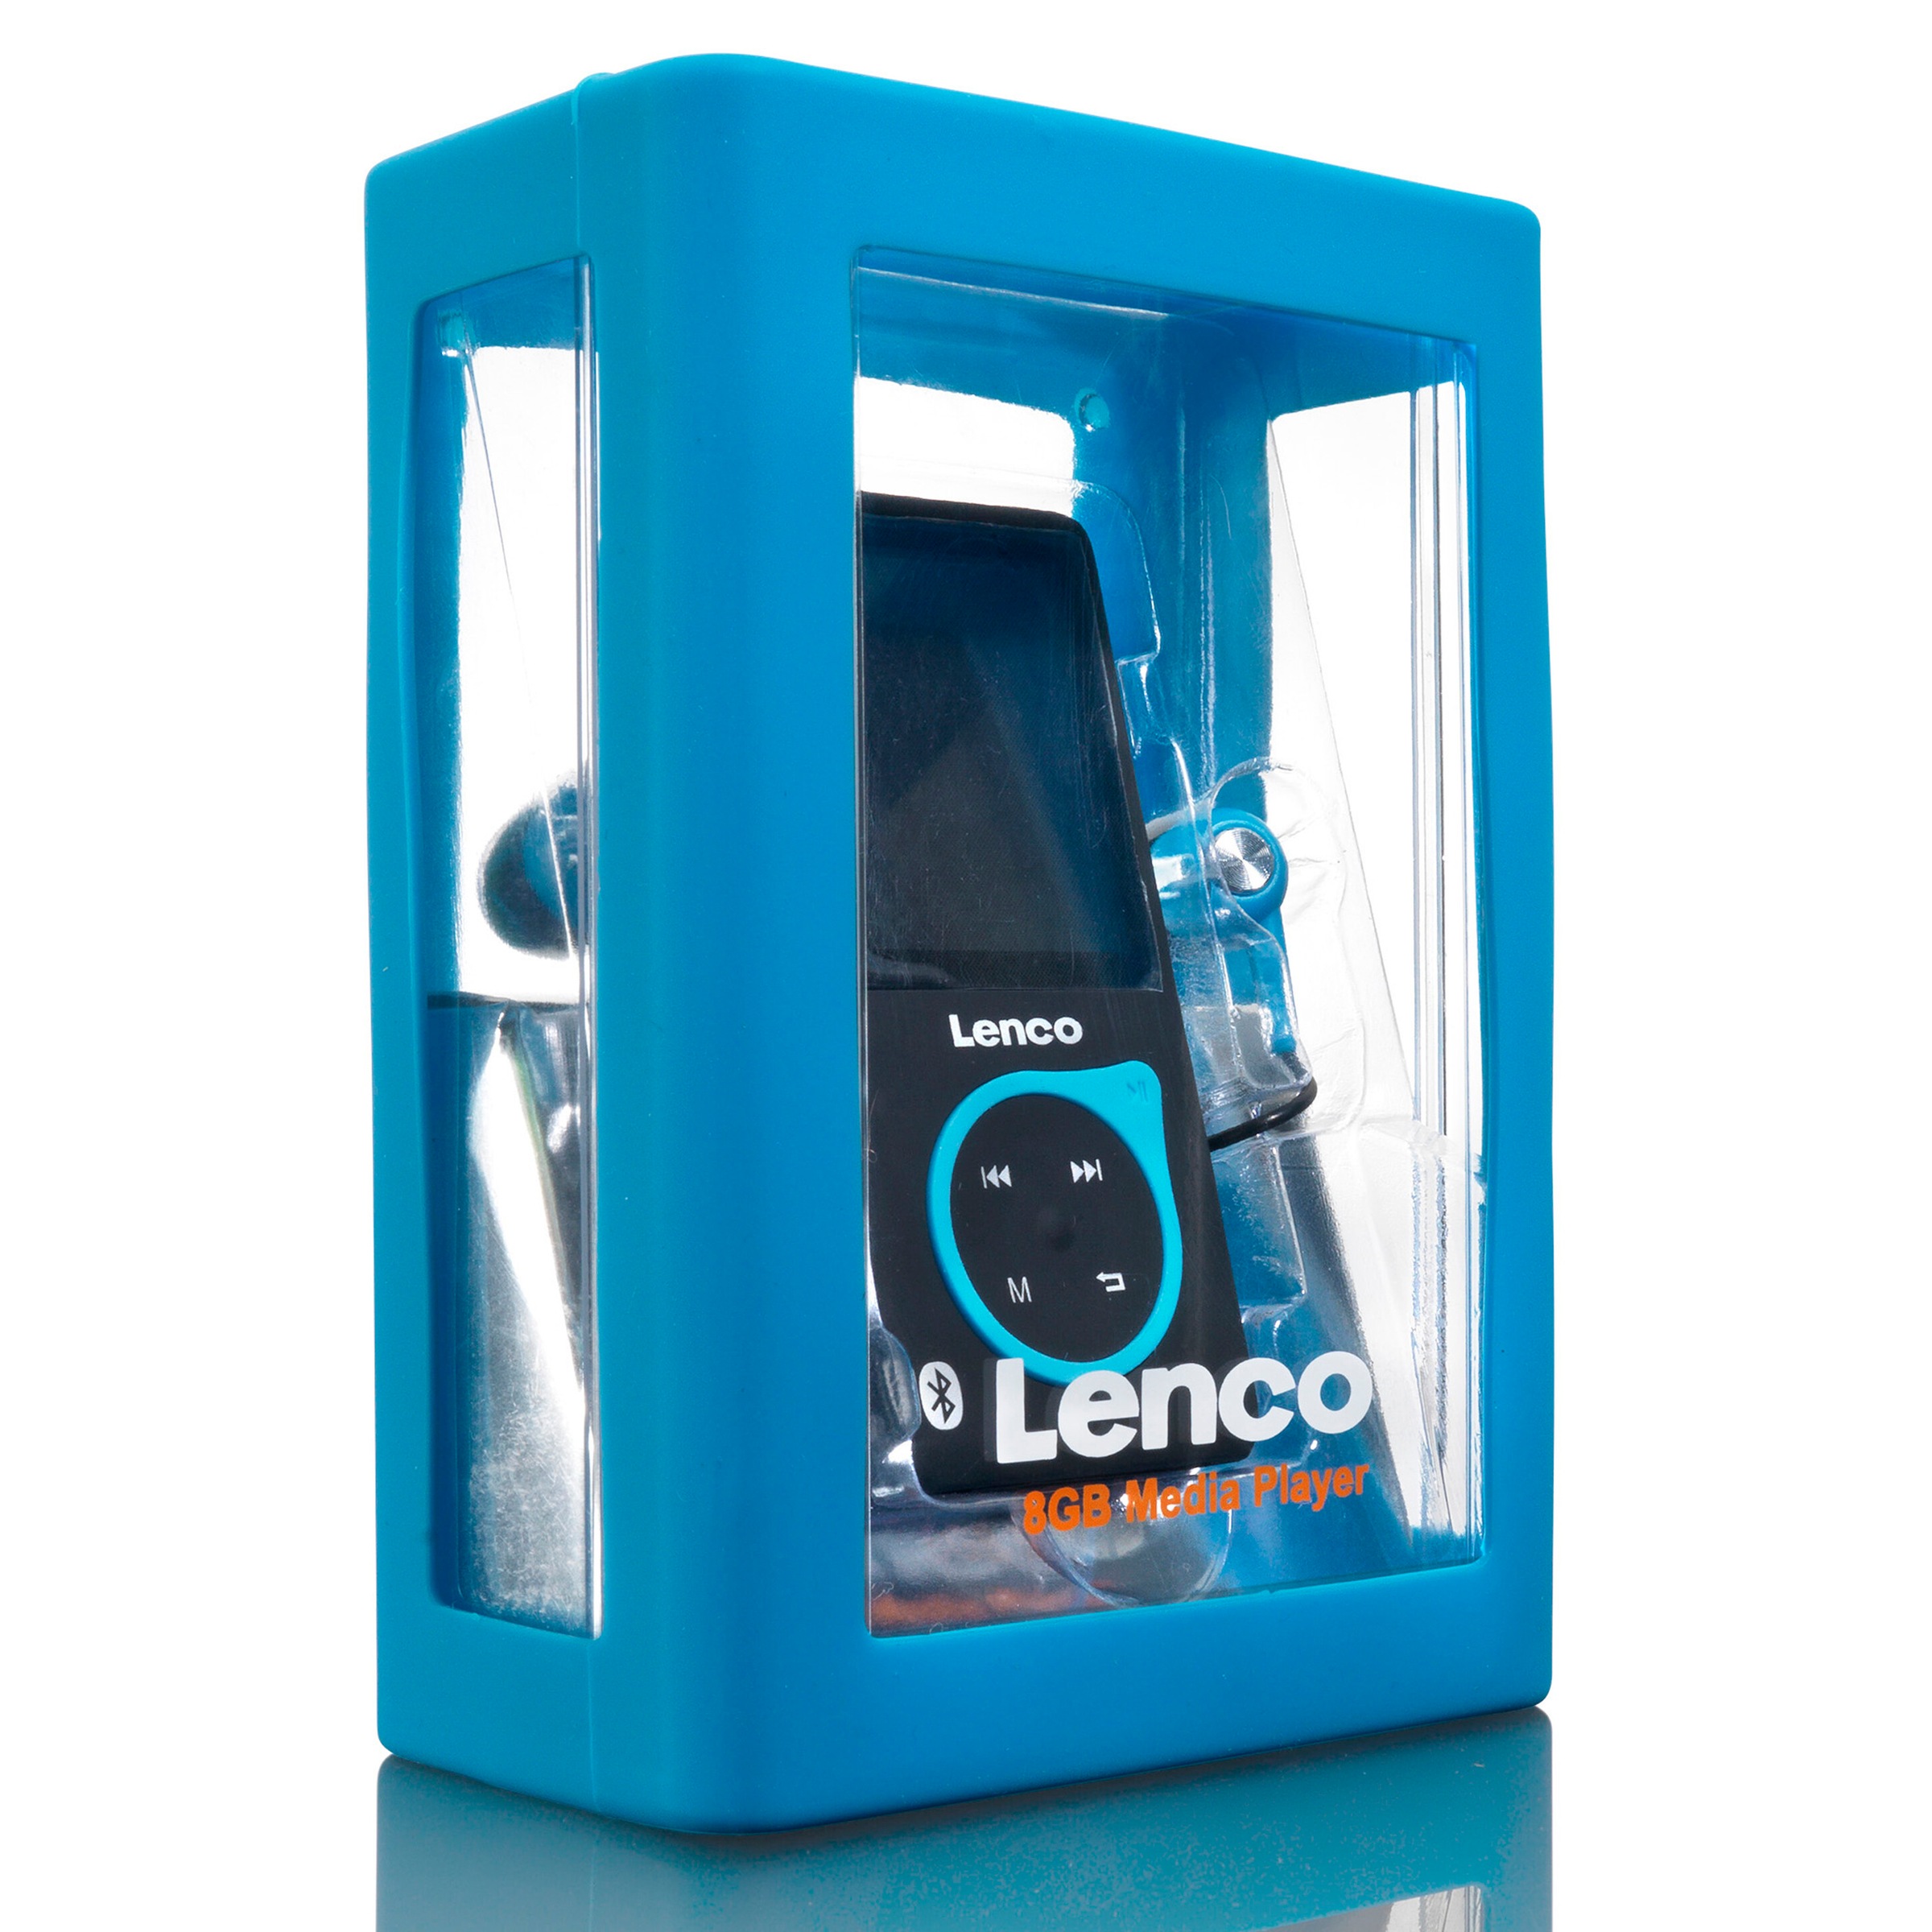 OTTO »Xemio-768 jetzt 8GB-Speicherkarte, Lenco bei blue«, Bluetooth MP3-Player kaufen